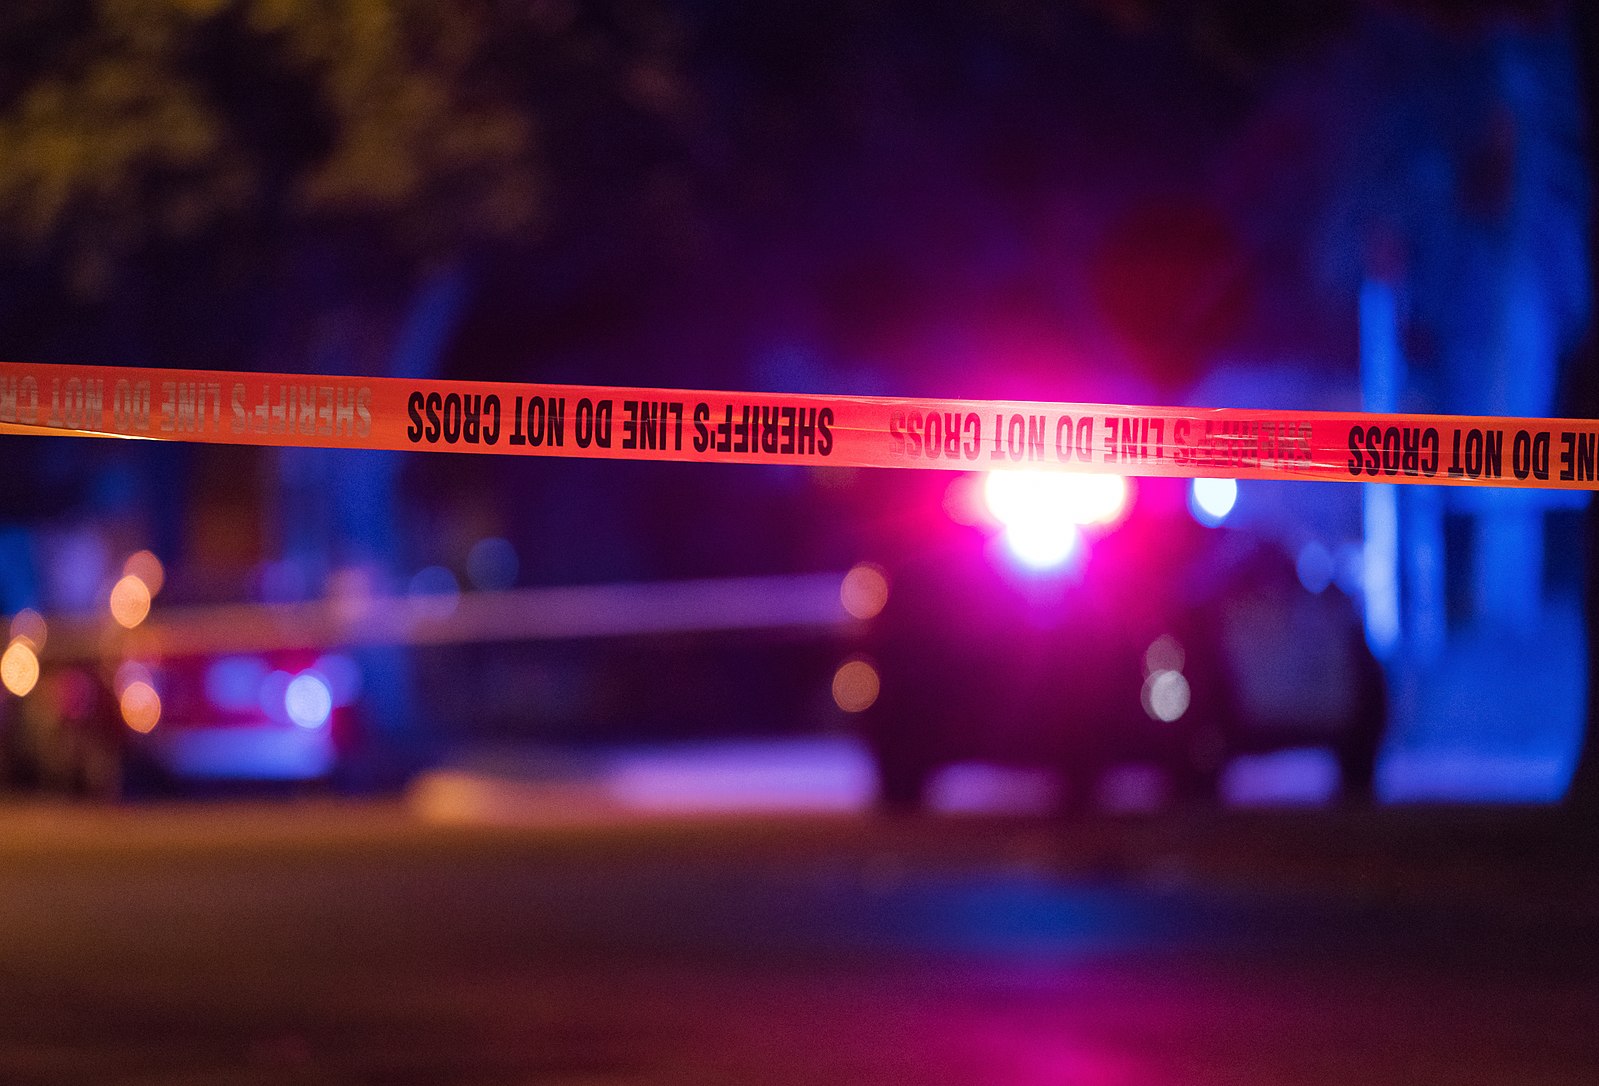 Thurman Blevins police shooting scene, Minneapoils, Minnesota // SHERIFF'S LINE DO NOT CROSS